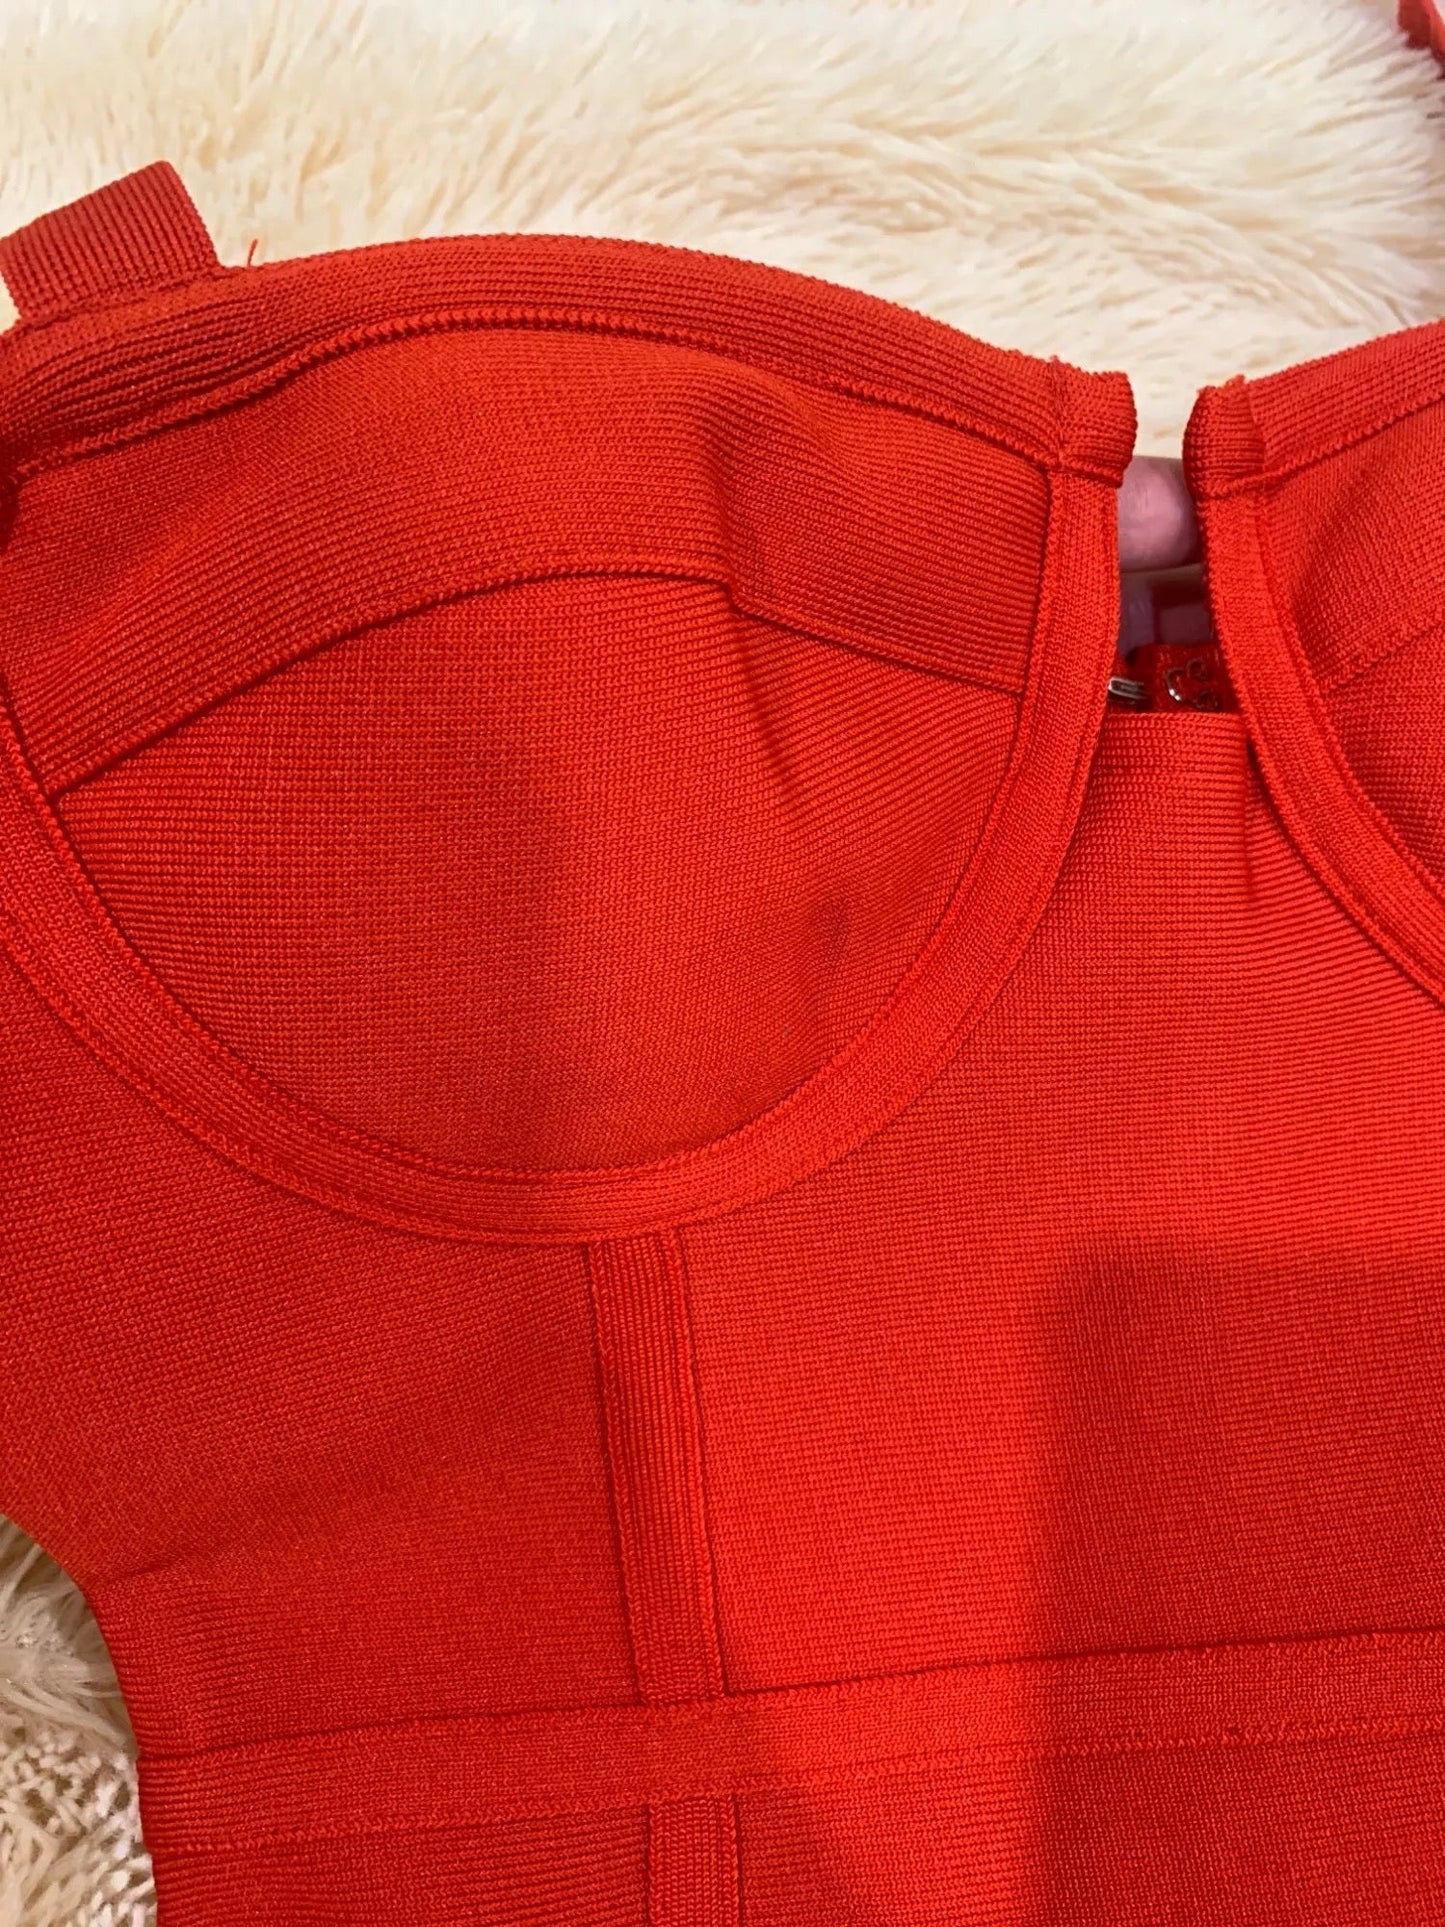 Tiffany Bodycon Dress (Red)